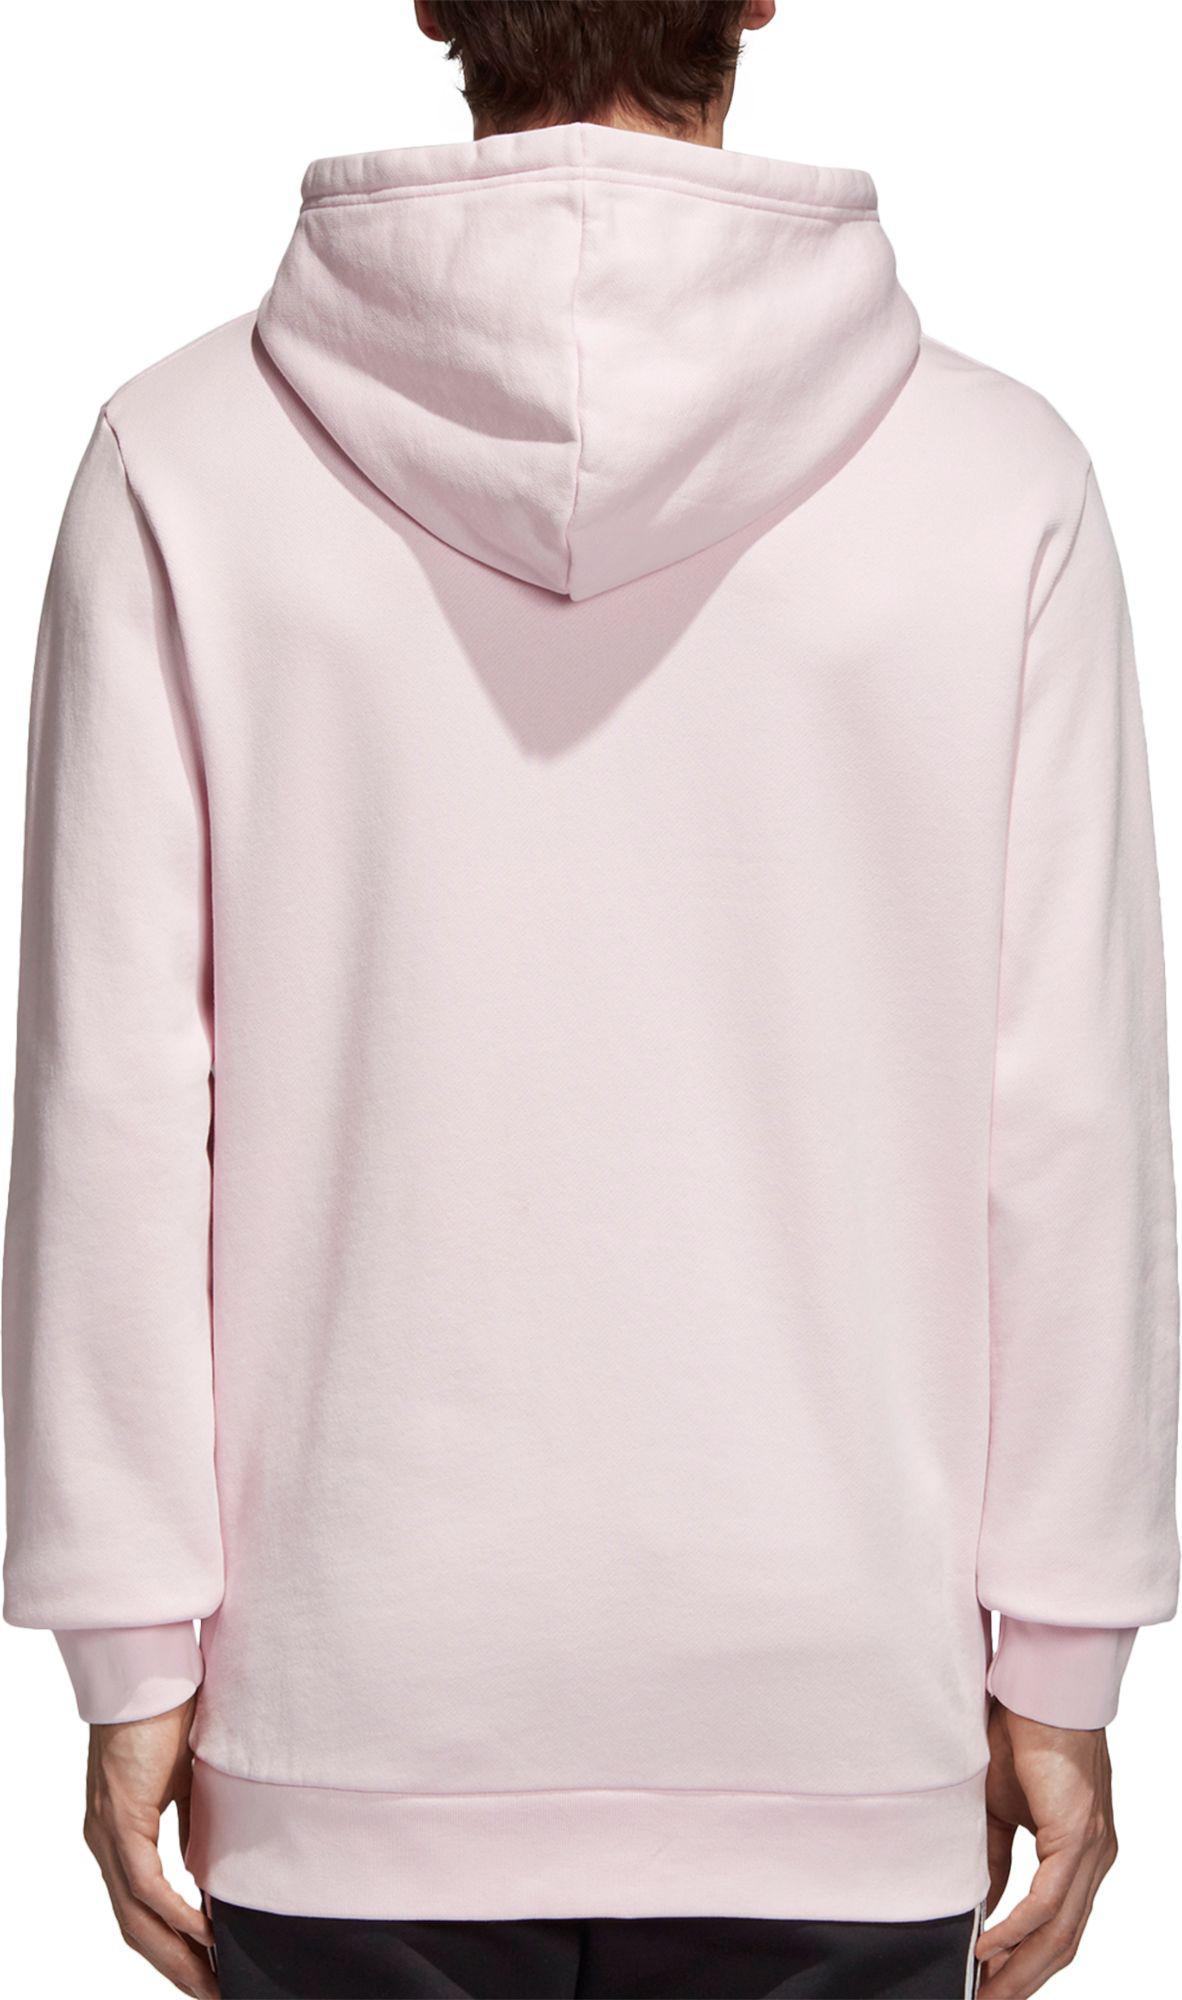 adidas Cotton Originals Trefoil Warm-up Hoodie in Light Pink (Pink) for ...